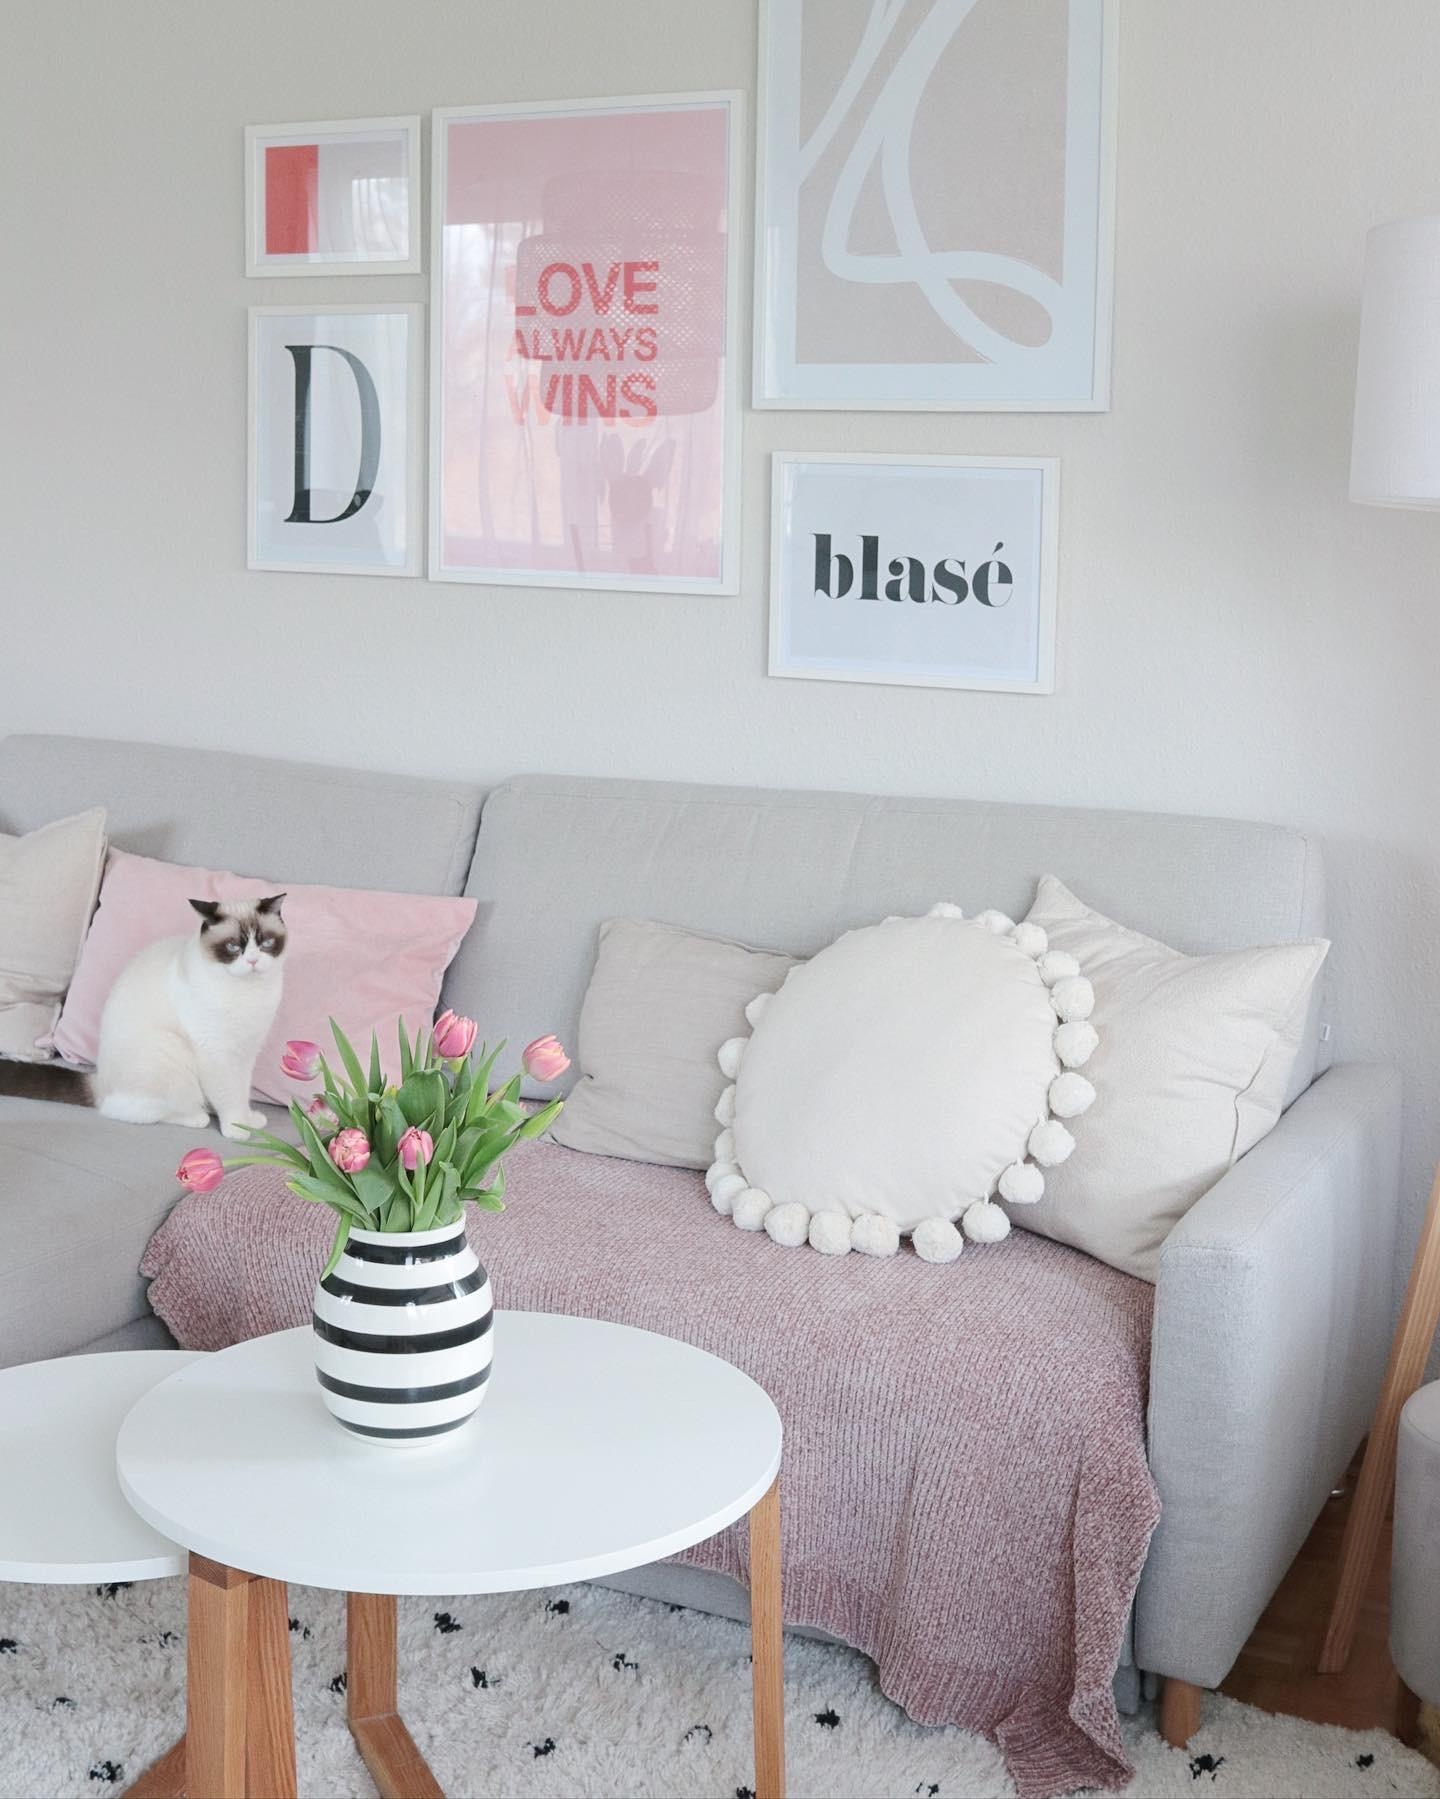 Frühlingsgefühle ♥
#wohnzimmer #interior #hygge #tulpen #rosaliving #livingroom #couchliebt #skandi #wandgestaltung 